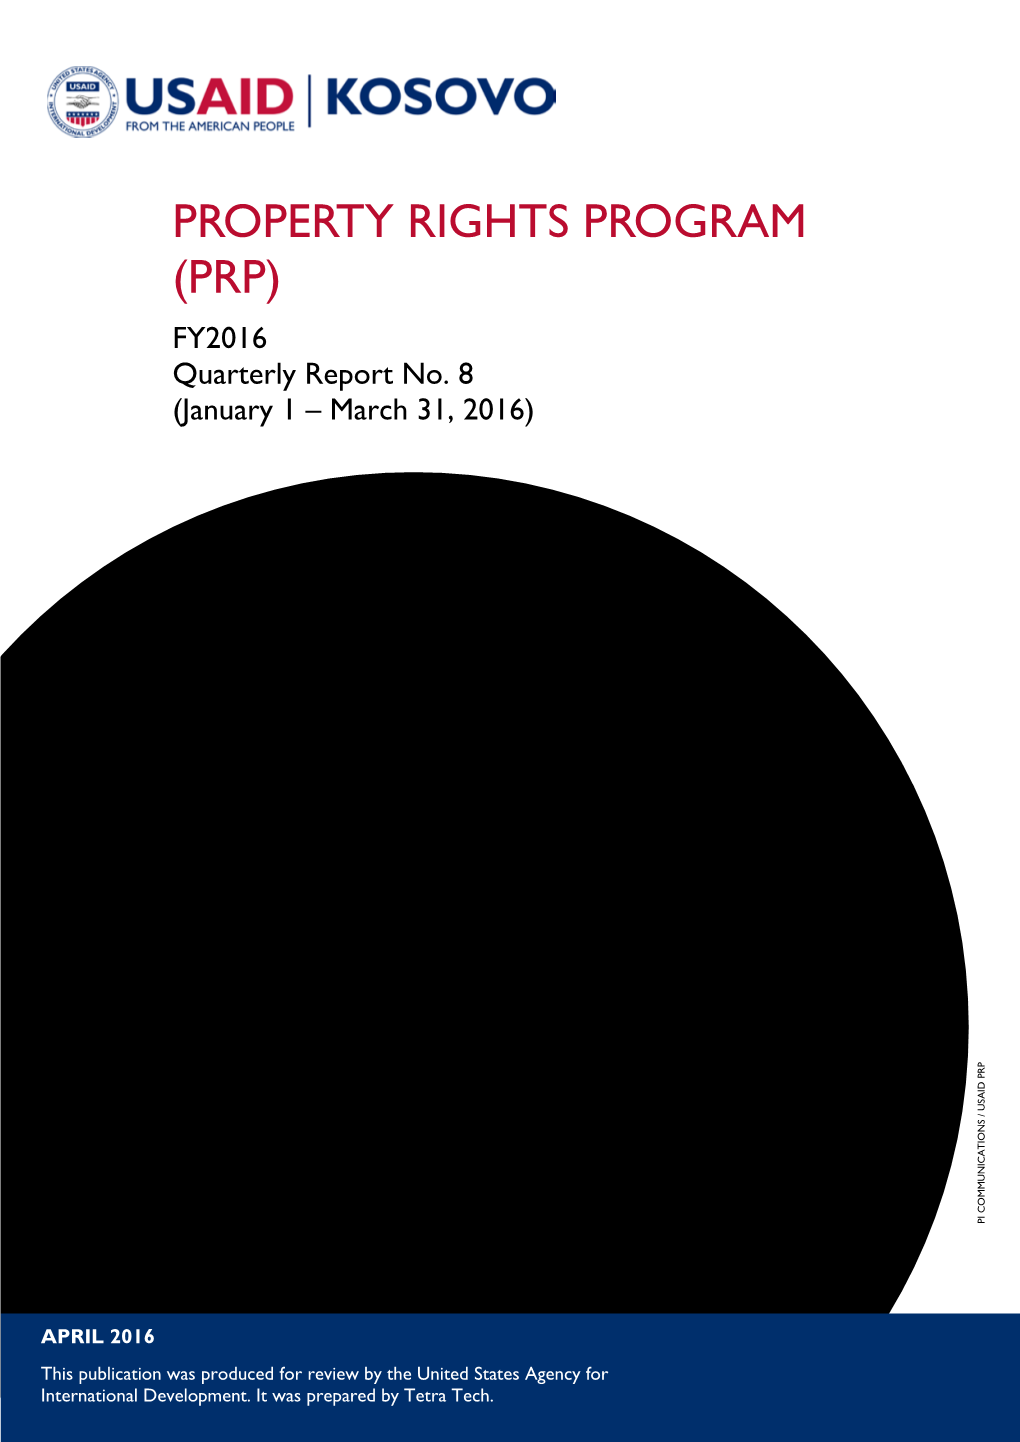 Kosovo Property Rights Program (PRP) Quarterly Report: January